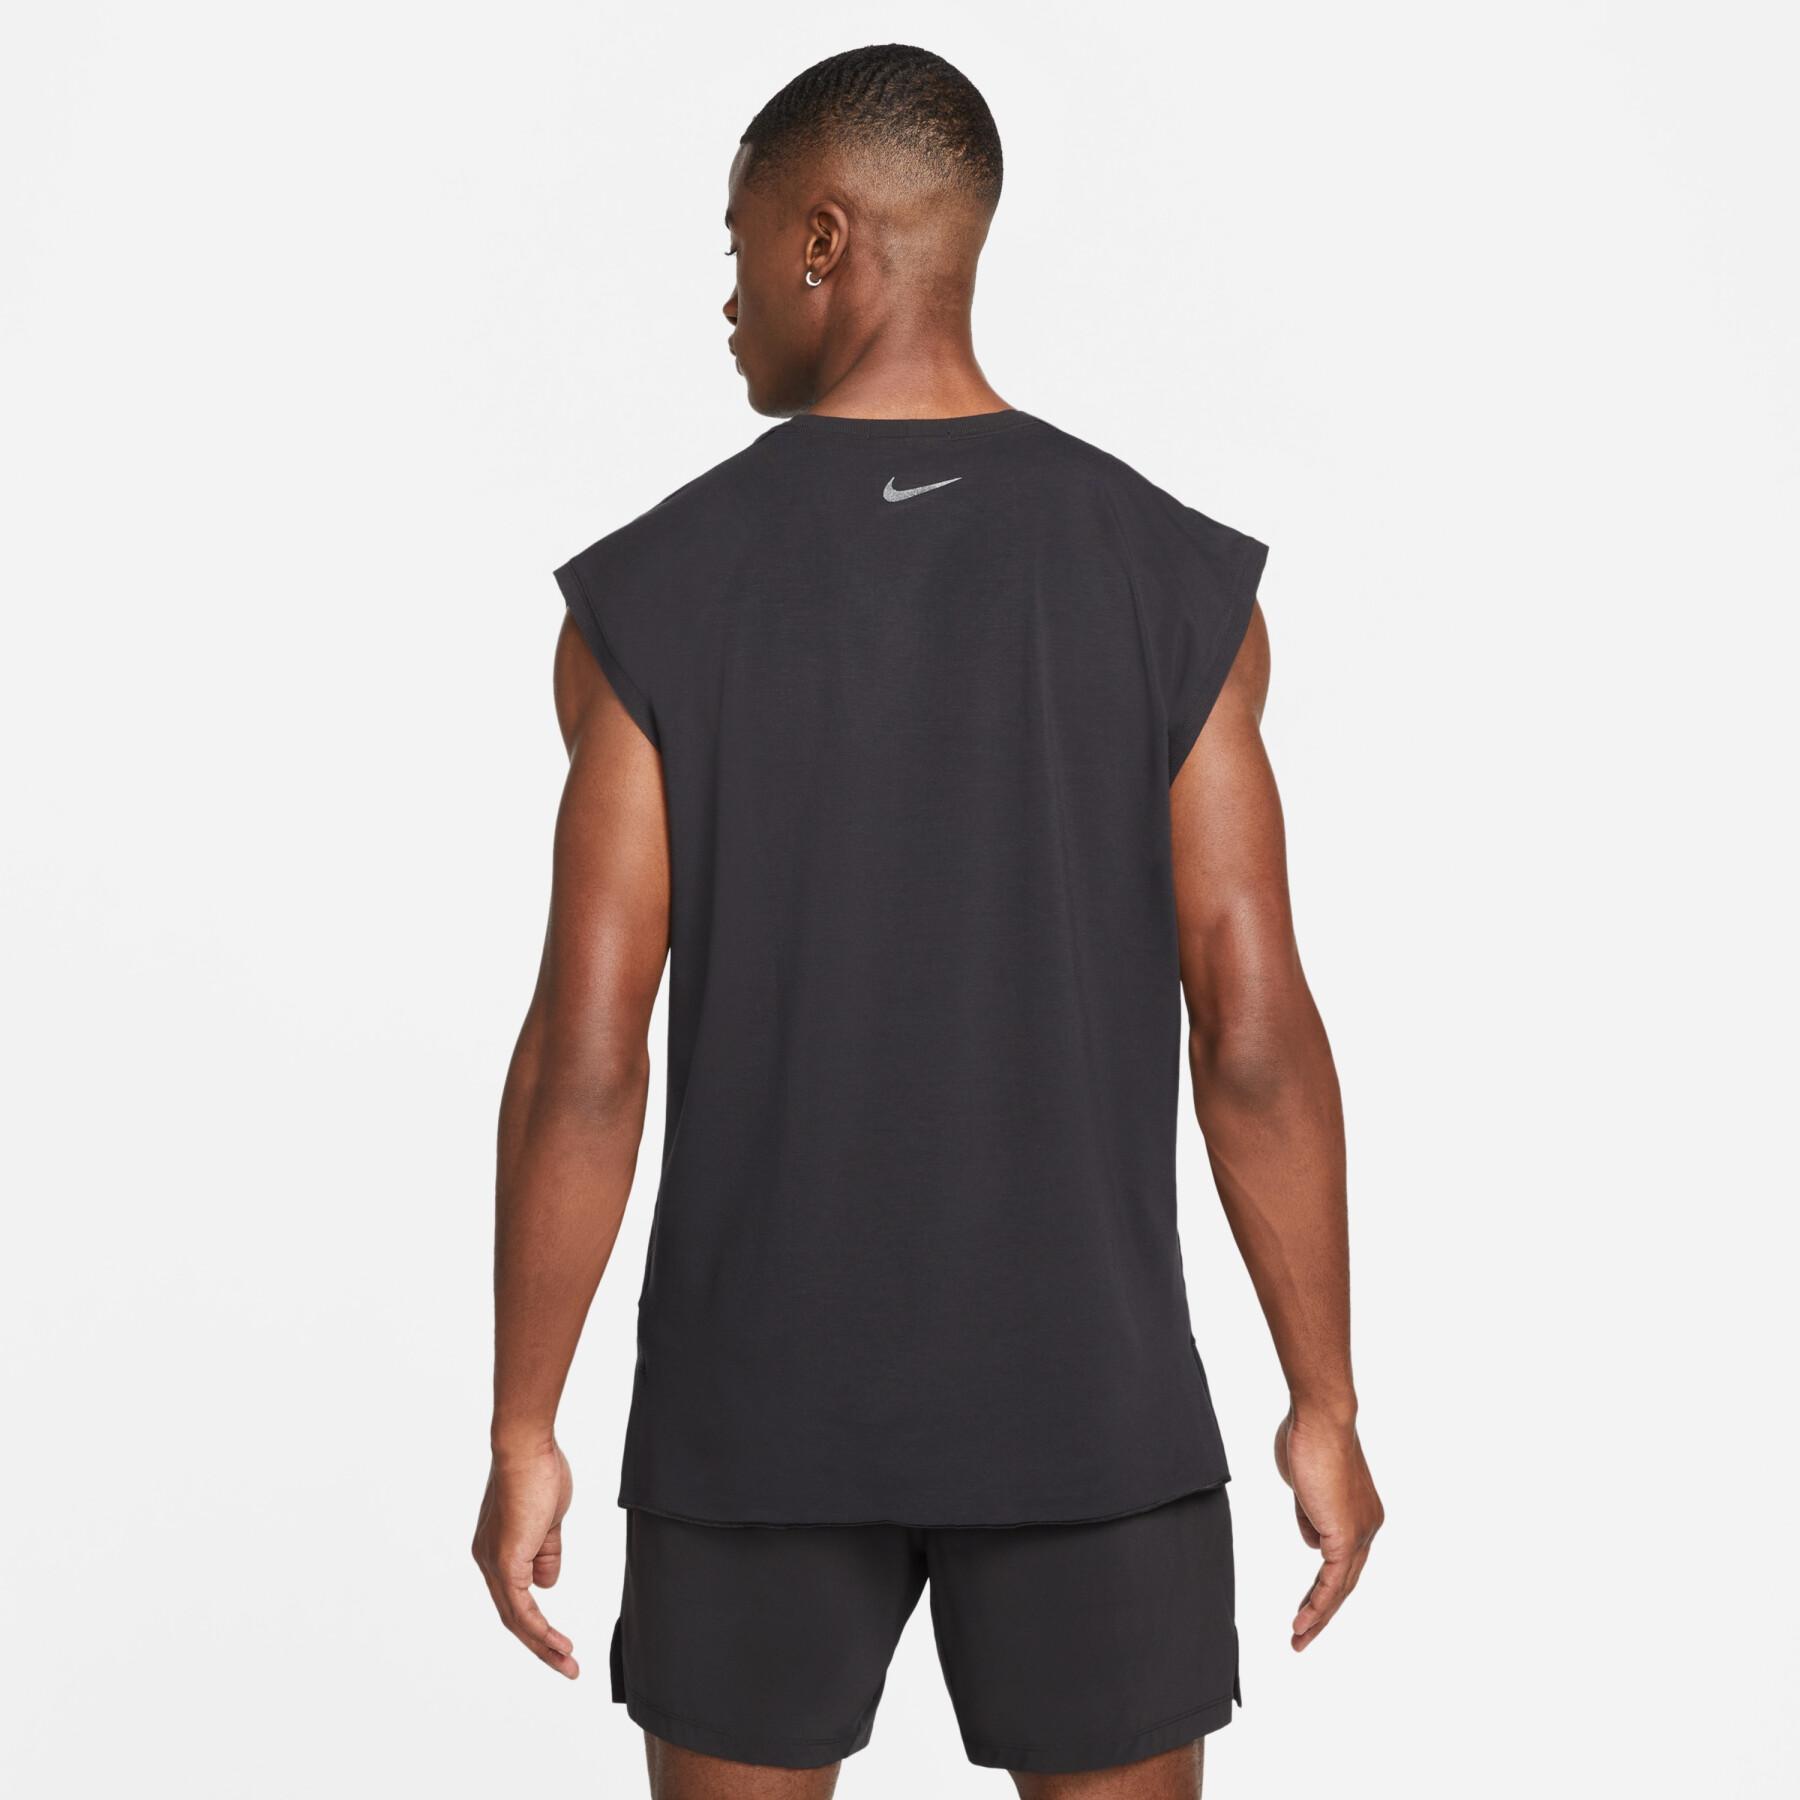 Camiseta de tirantes Nike Yoga Dri-FIT